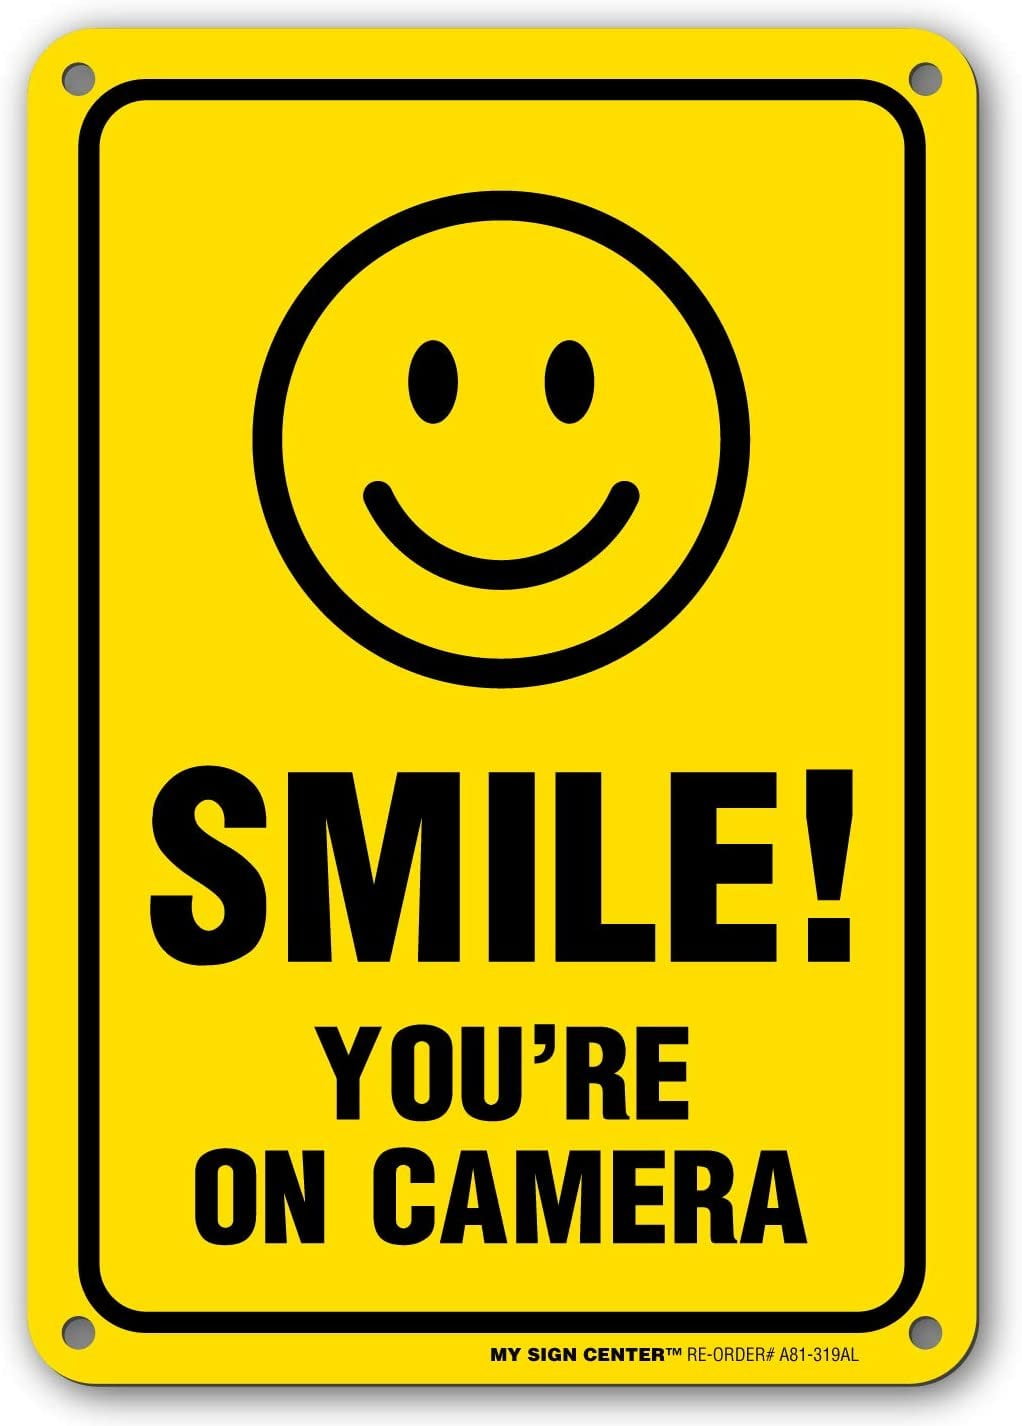 4 Home Security SMILE YOU'RE ON CAMERA Window Door Warning Vinyl Sticker Decal 